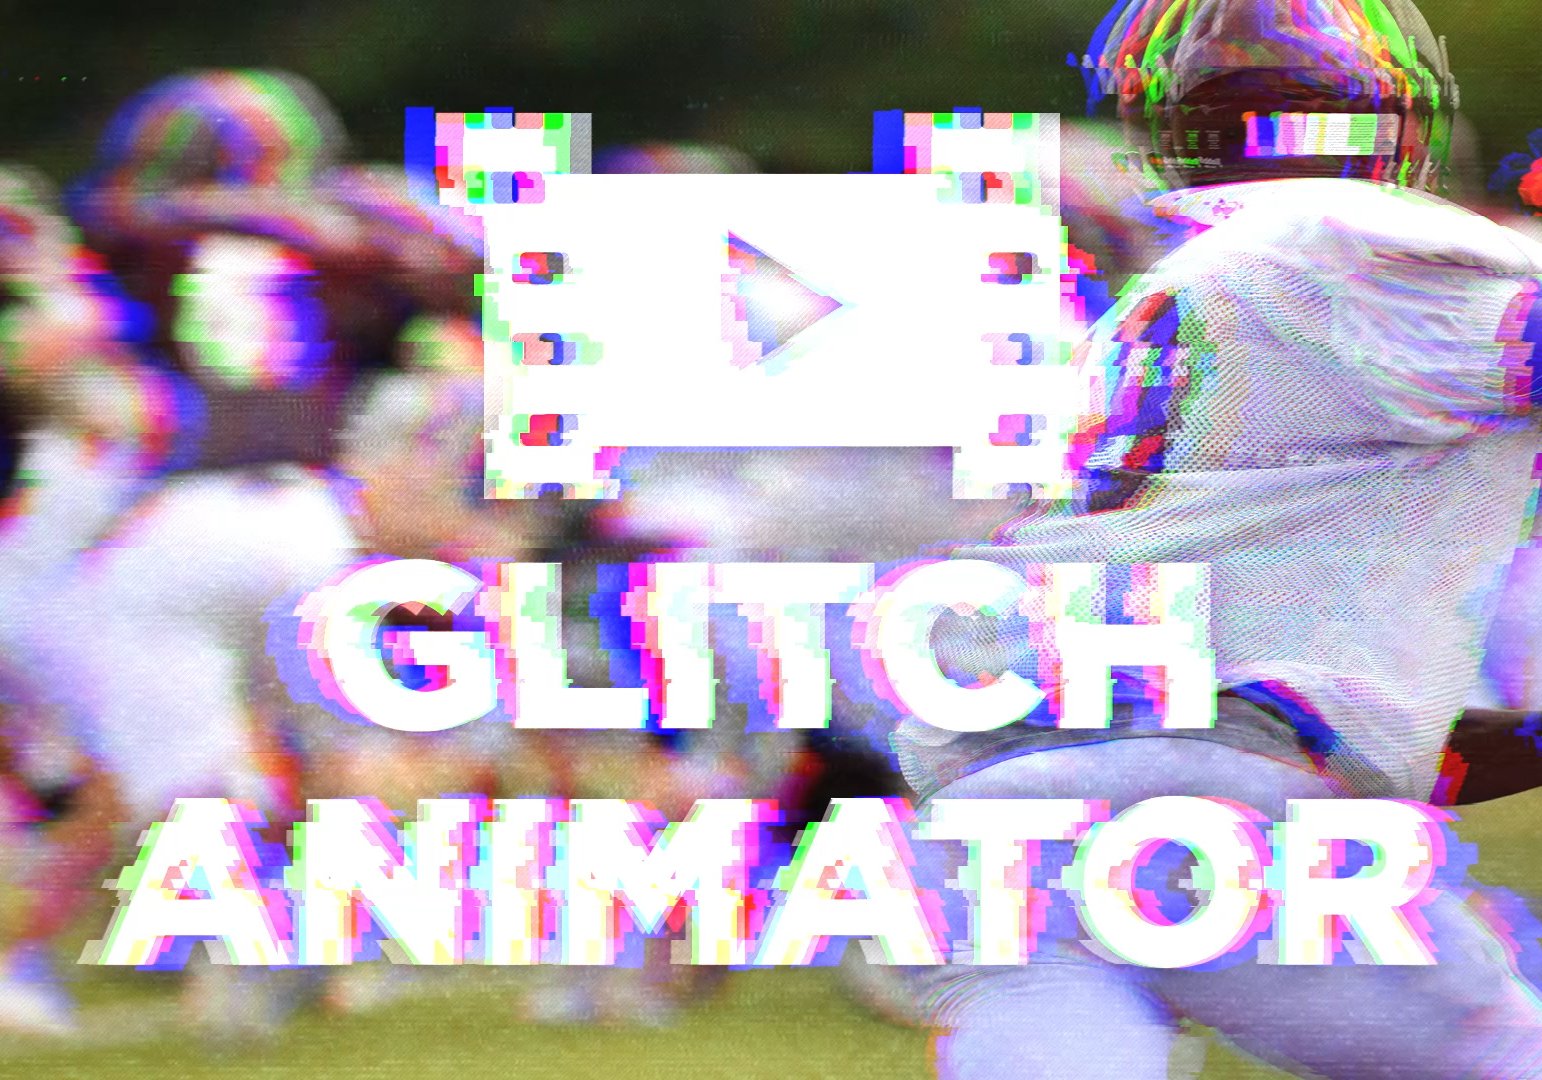 Glitch Animatorcover image.